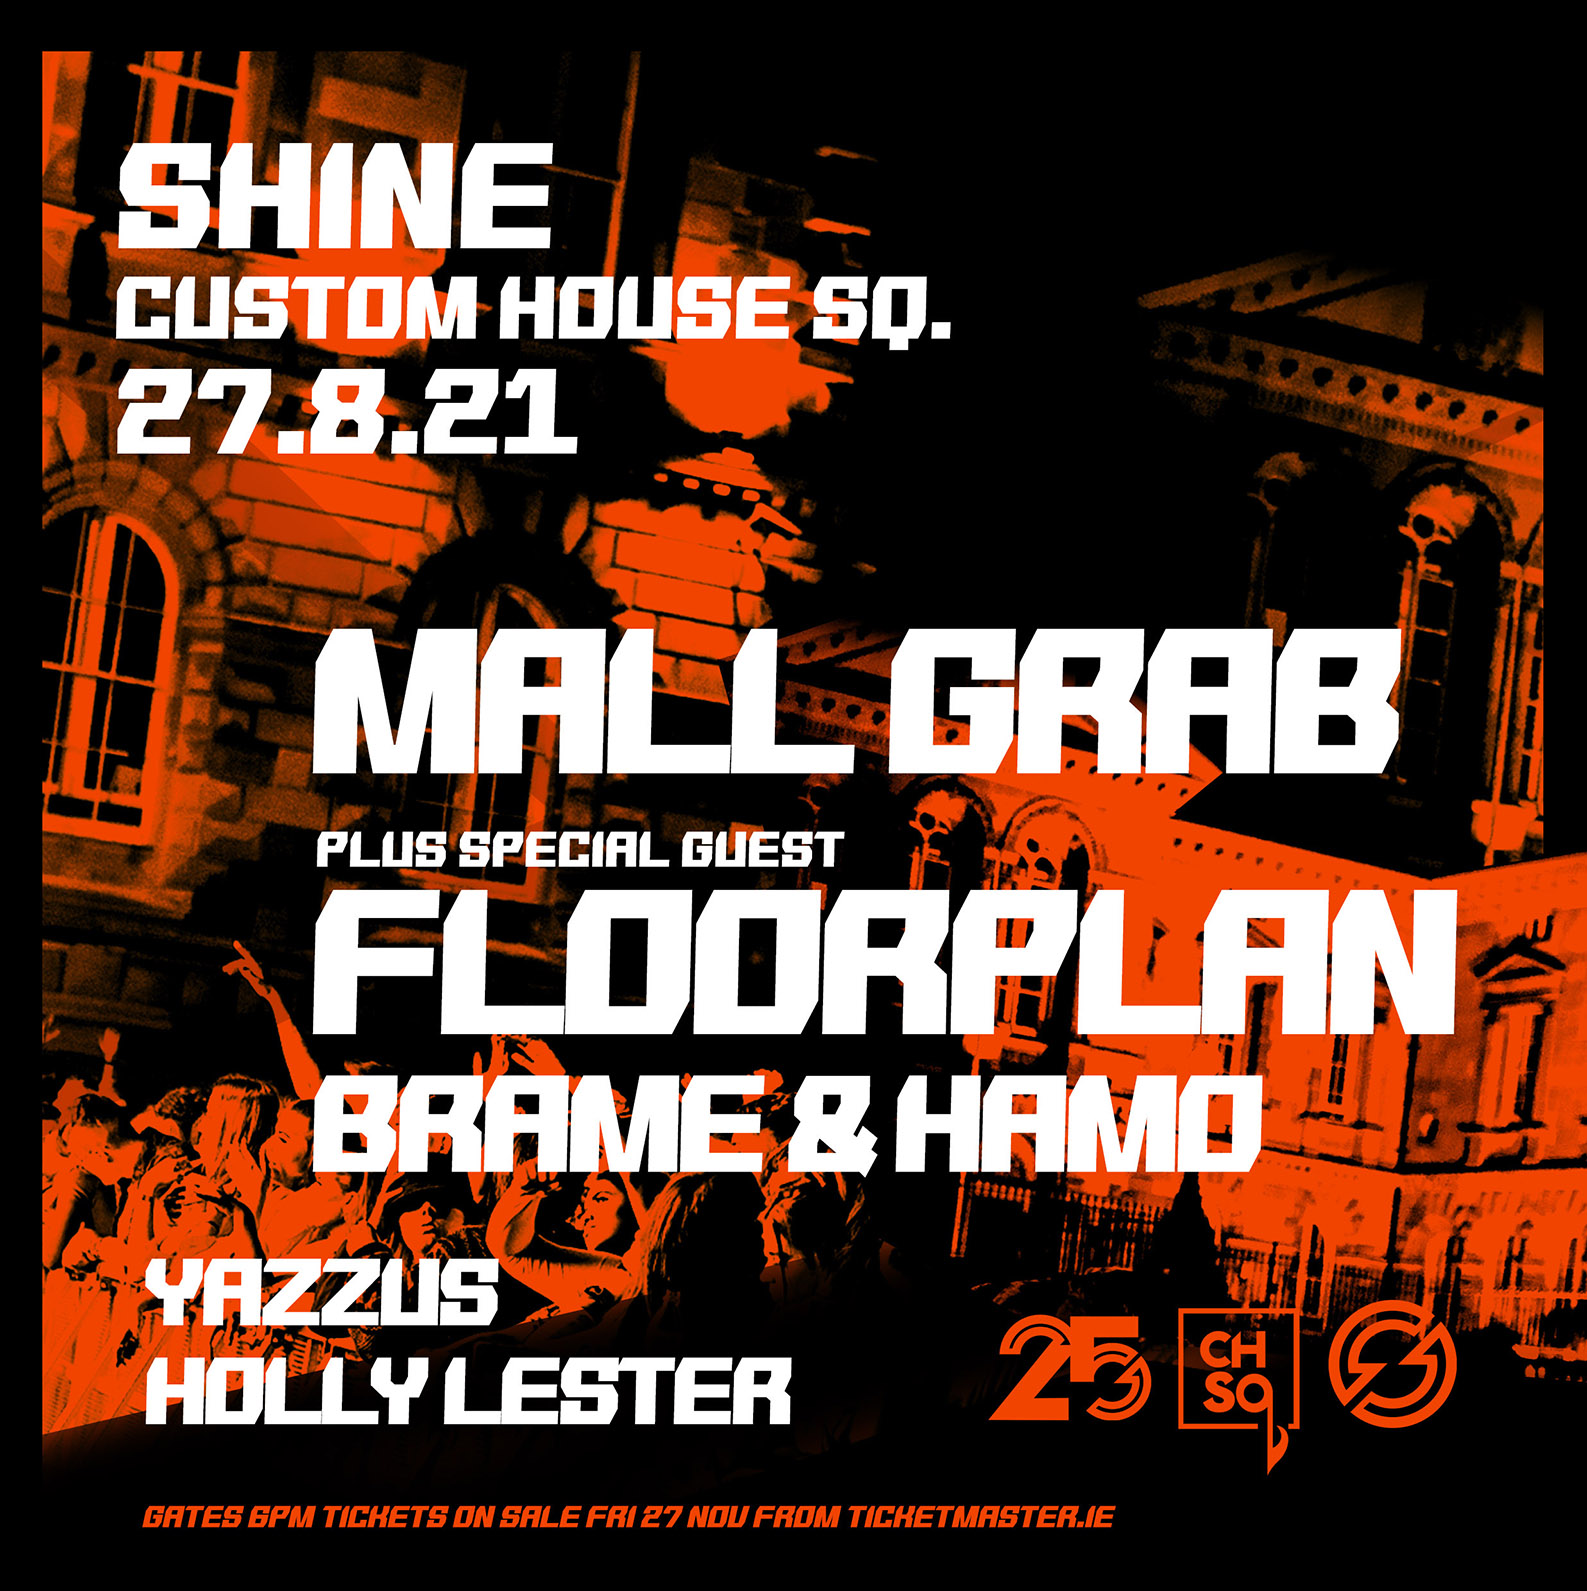 MALL GRAB announces headline Belfast show at SHINE @ CHSq in August 2021 1